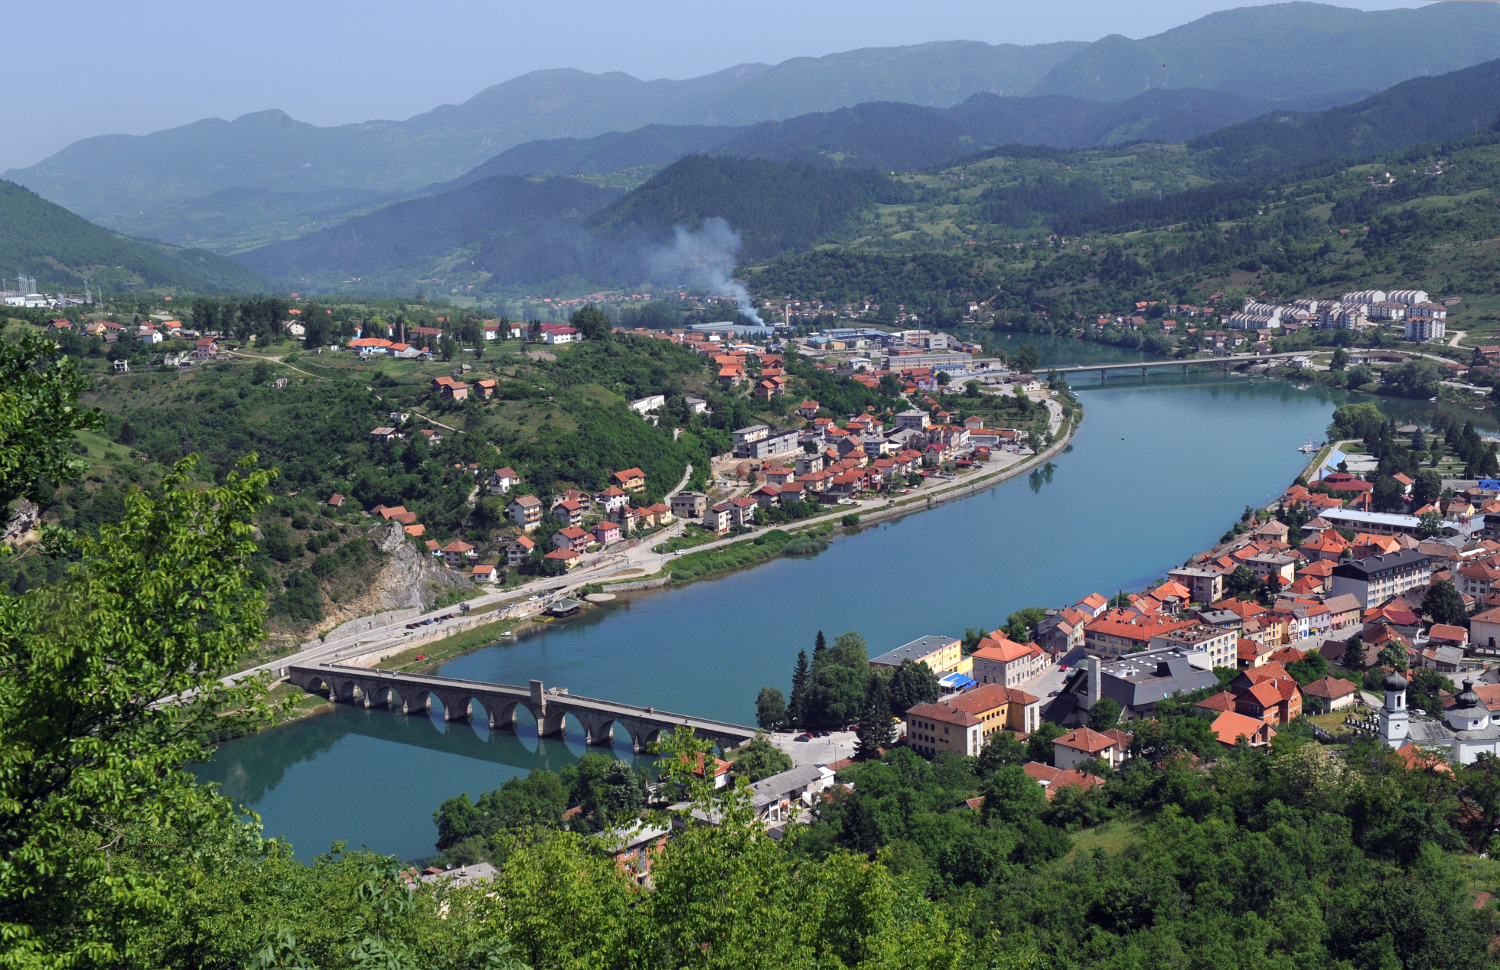 The Mehmet Paša Sokolović Bridge in Višegrad. Image by Bernd Zillich / Getty